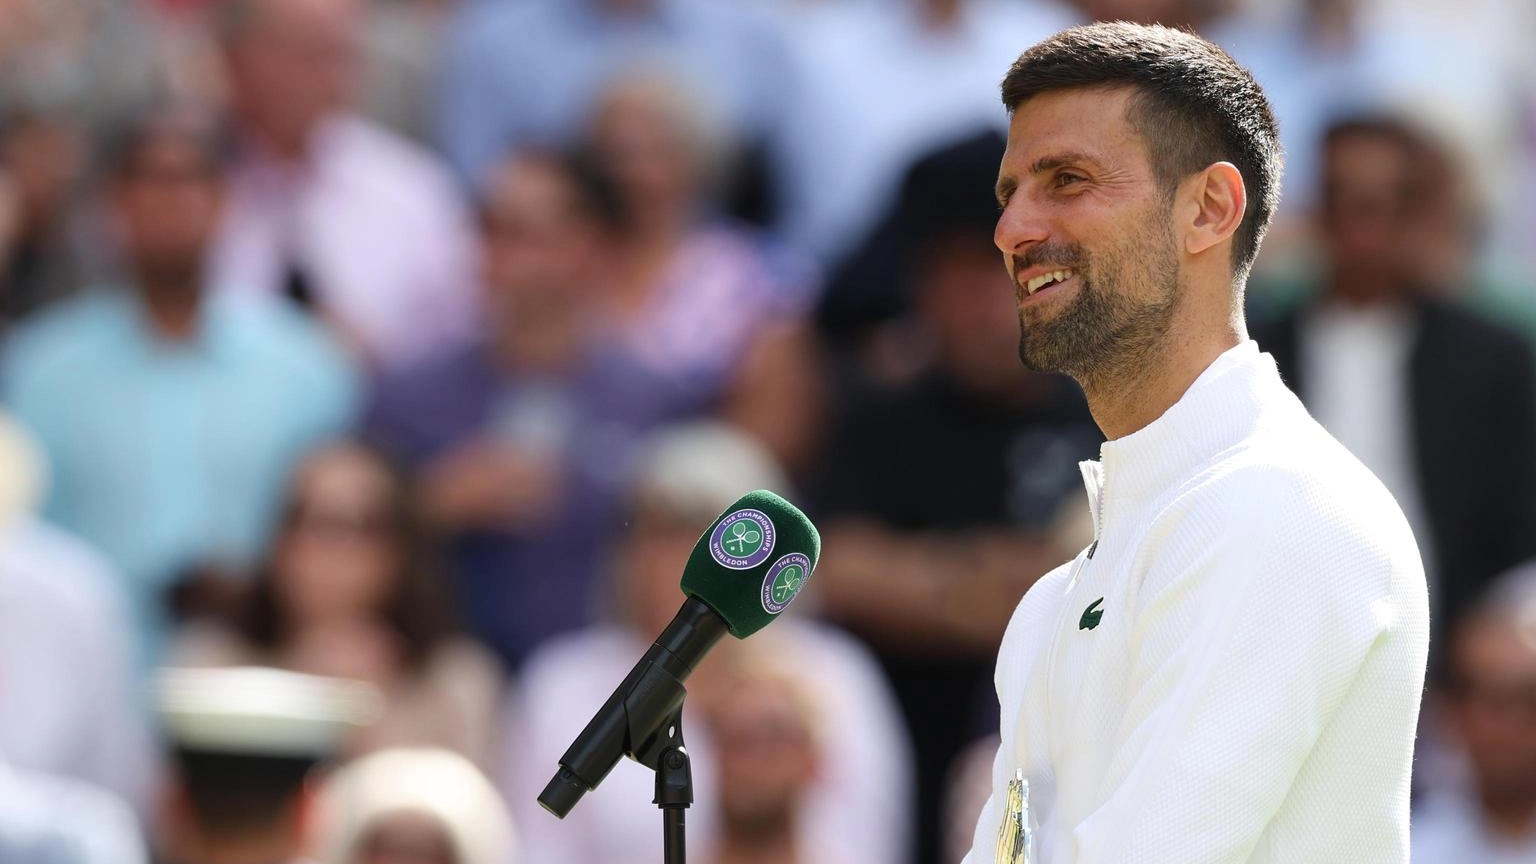 Parigi: scatta il tennis, Djokovic punta l'oro